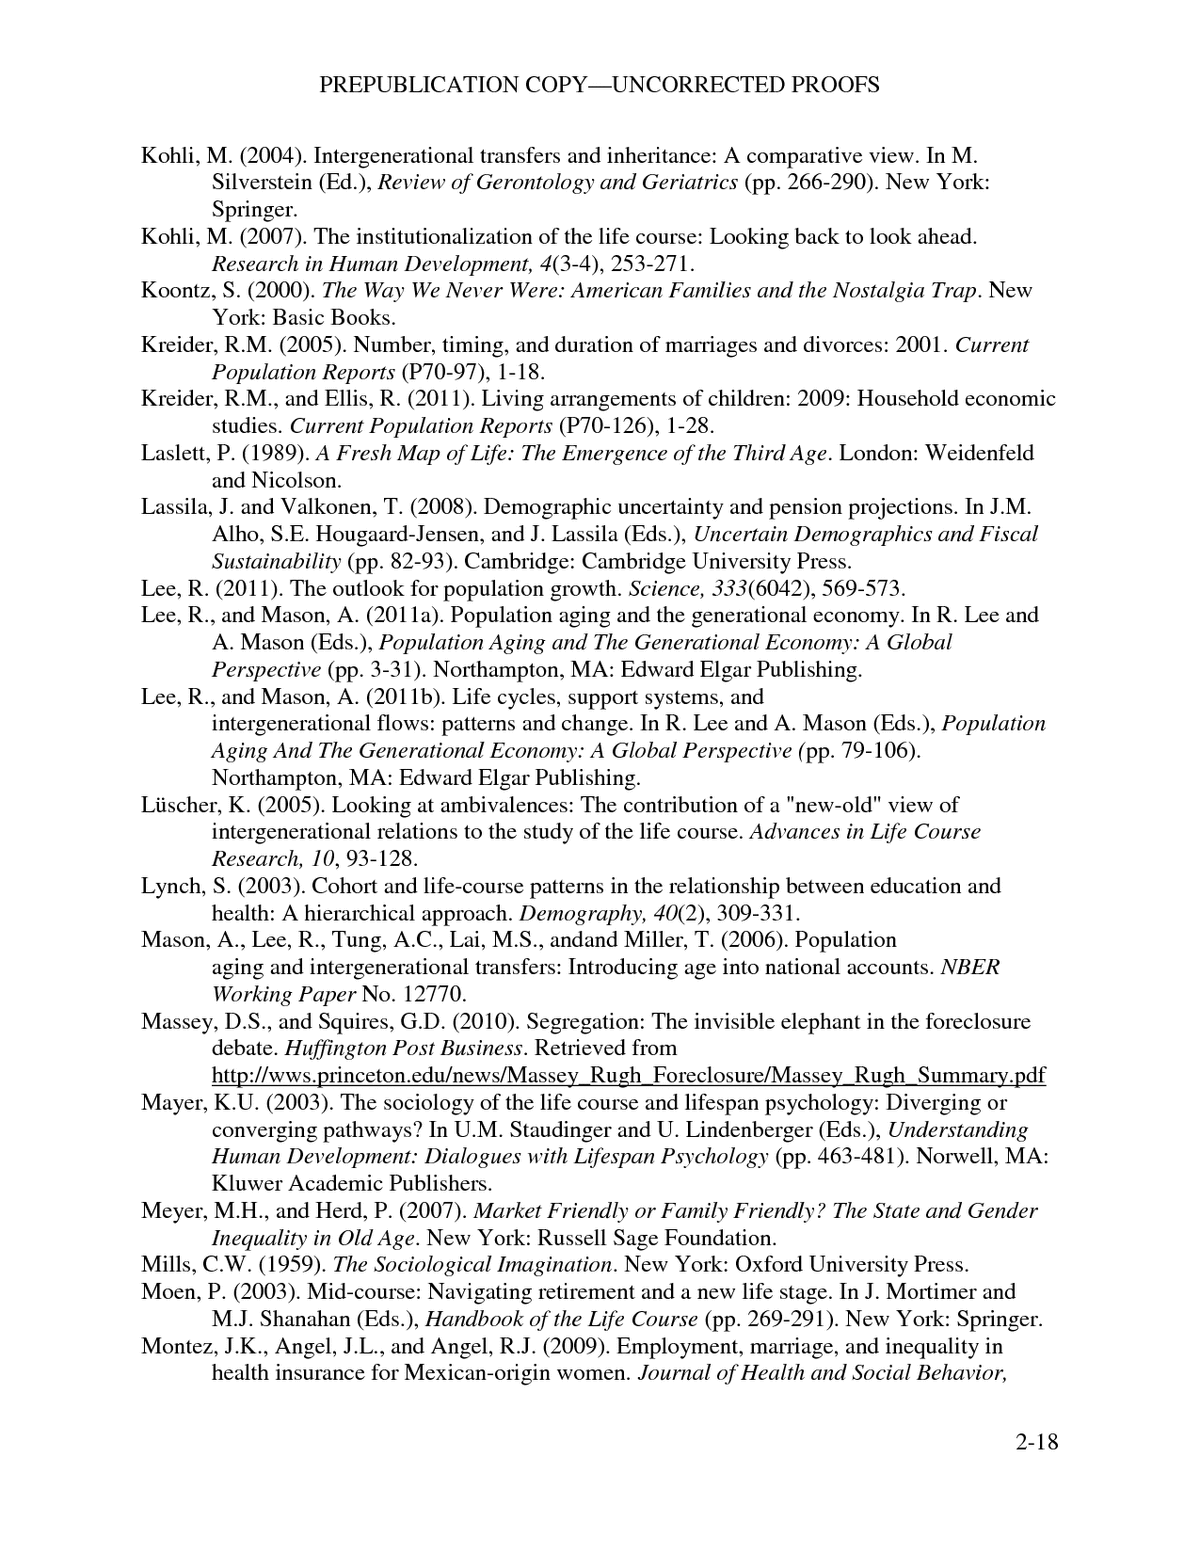 human development research paper 2010 40